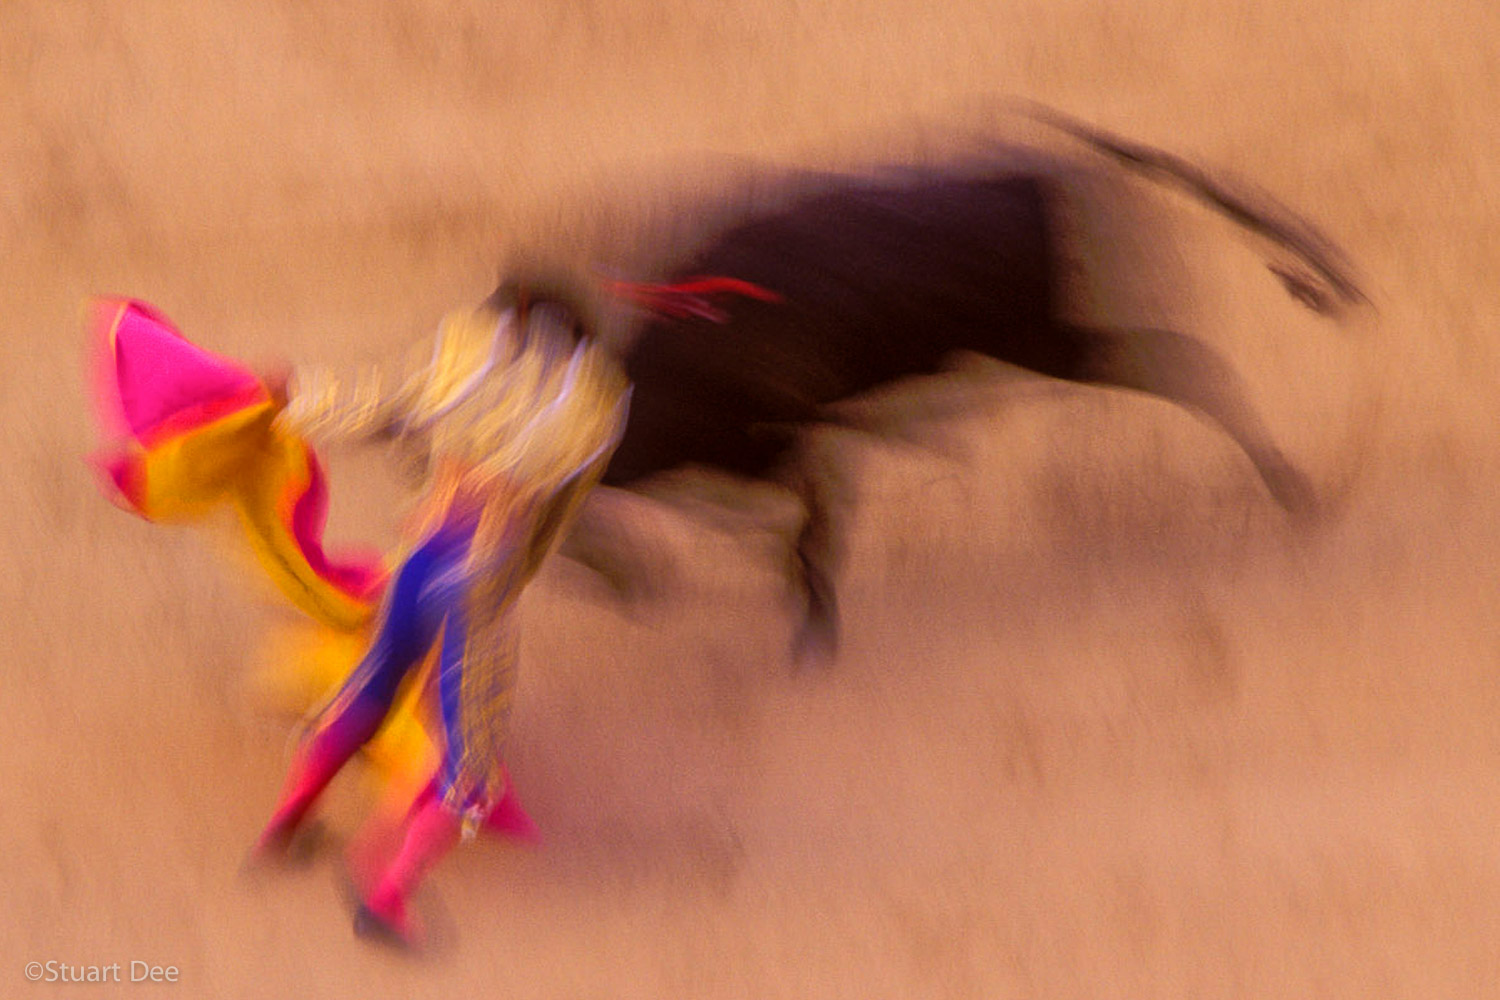  Bullfight, Madrid, Spain 